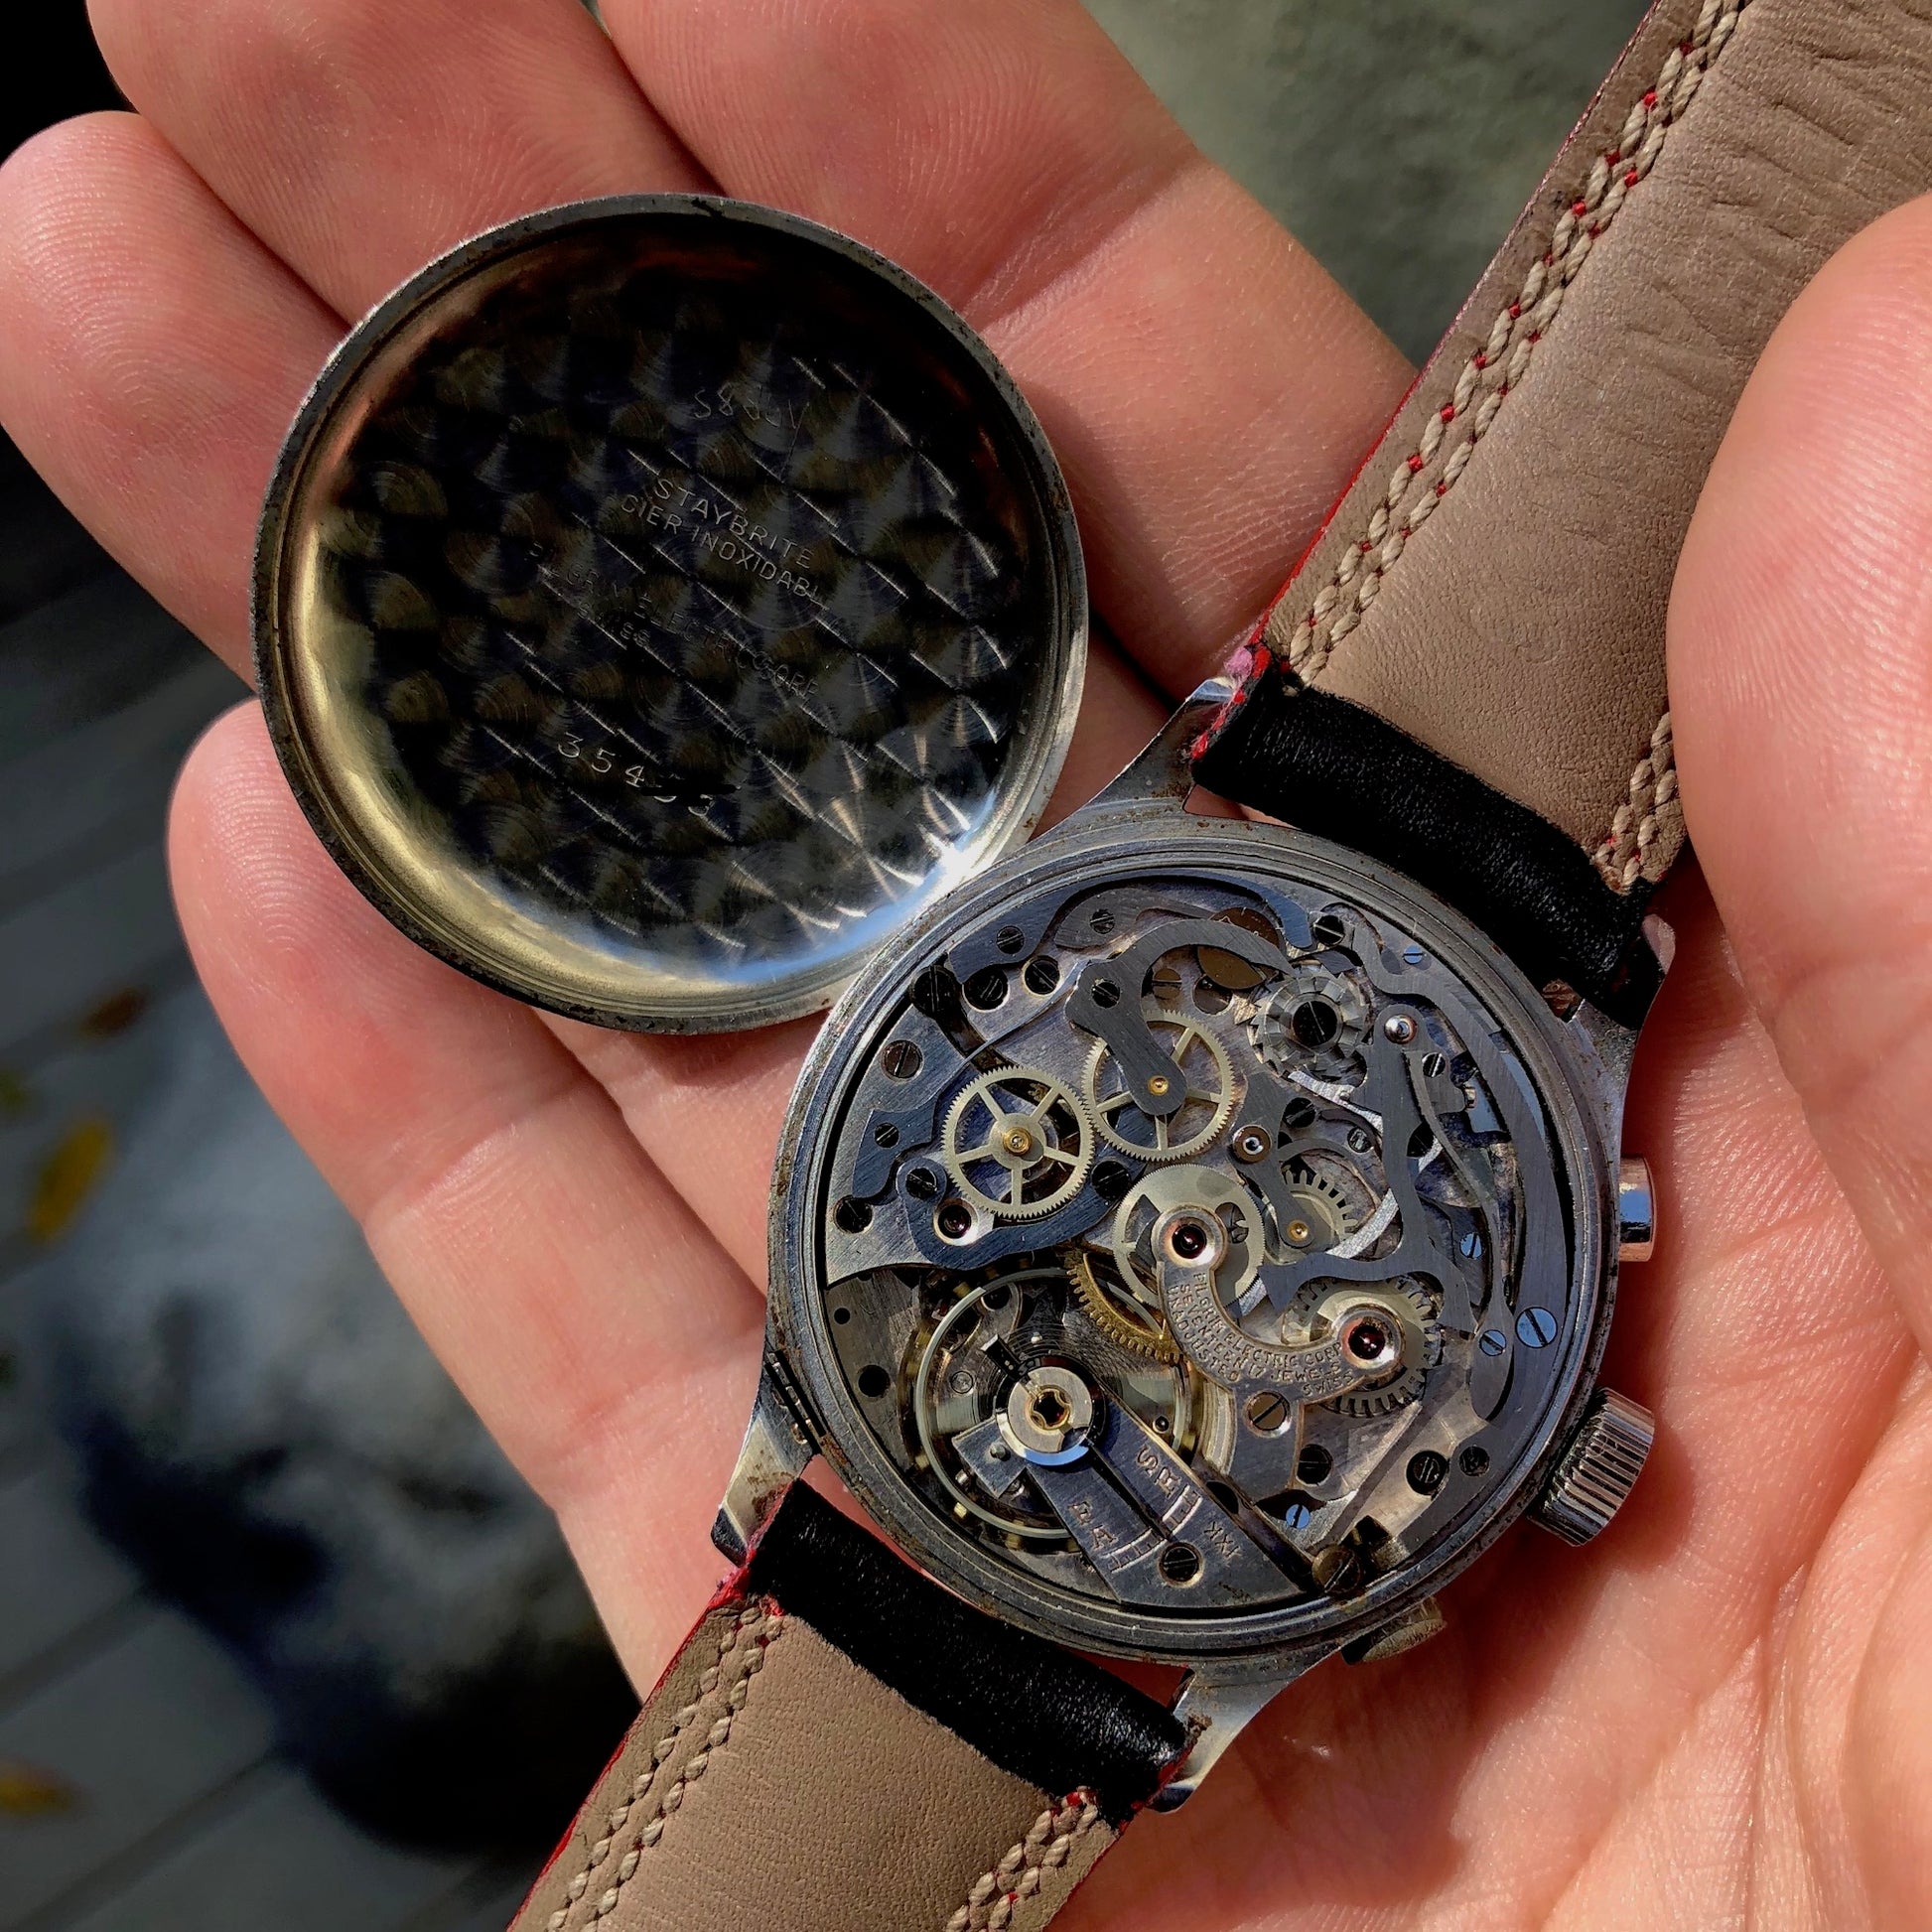 Vintage Jardur Bezelmeter 950 Waterproof Chronograph Valjoux 71 Pilots Wristwatch - Hashtag Watch Company